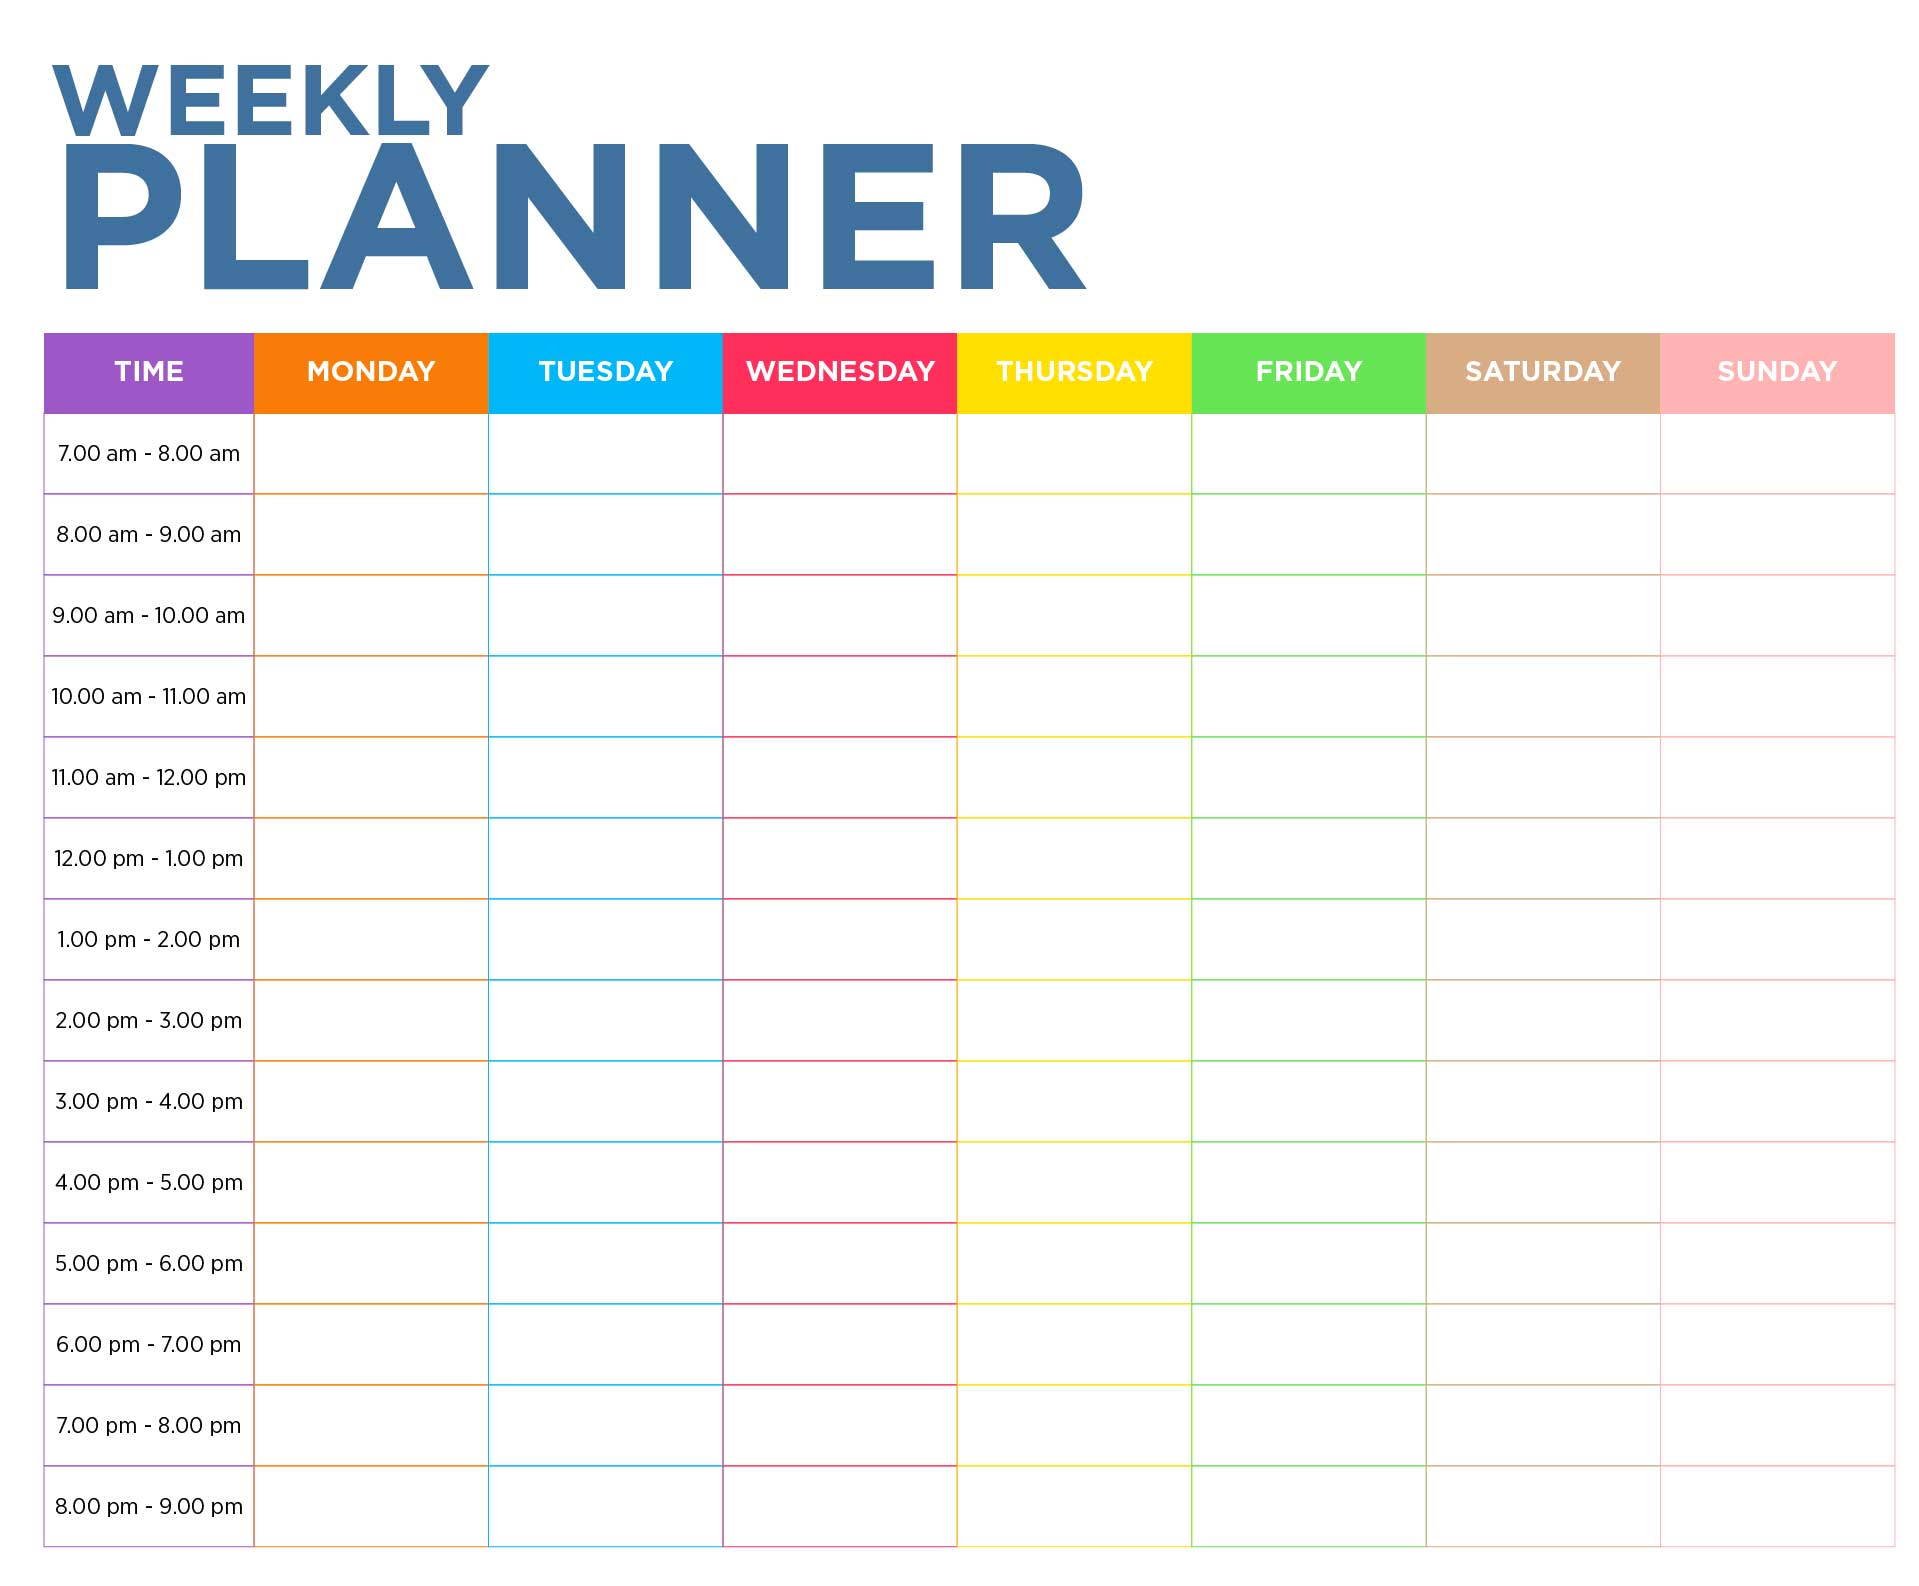 Weekly Hourly Planner Printable